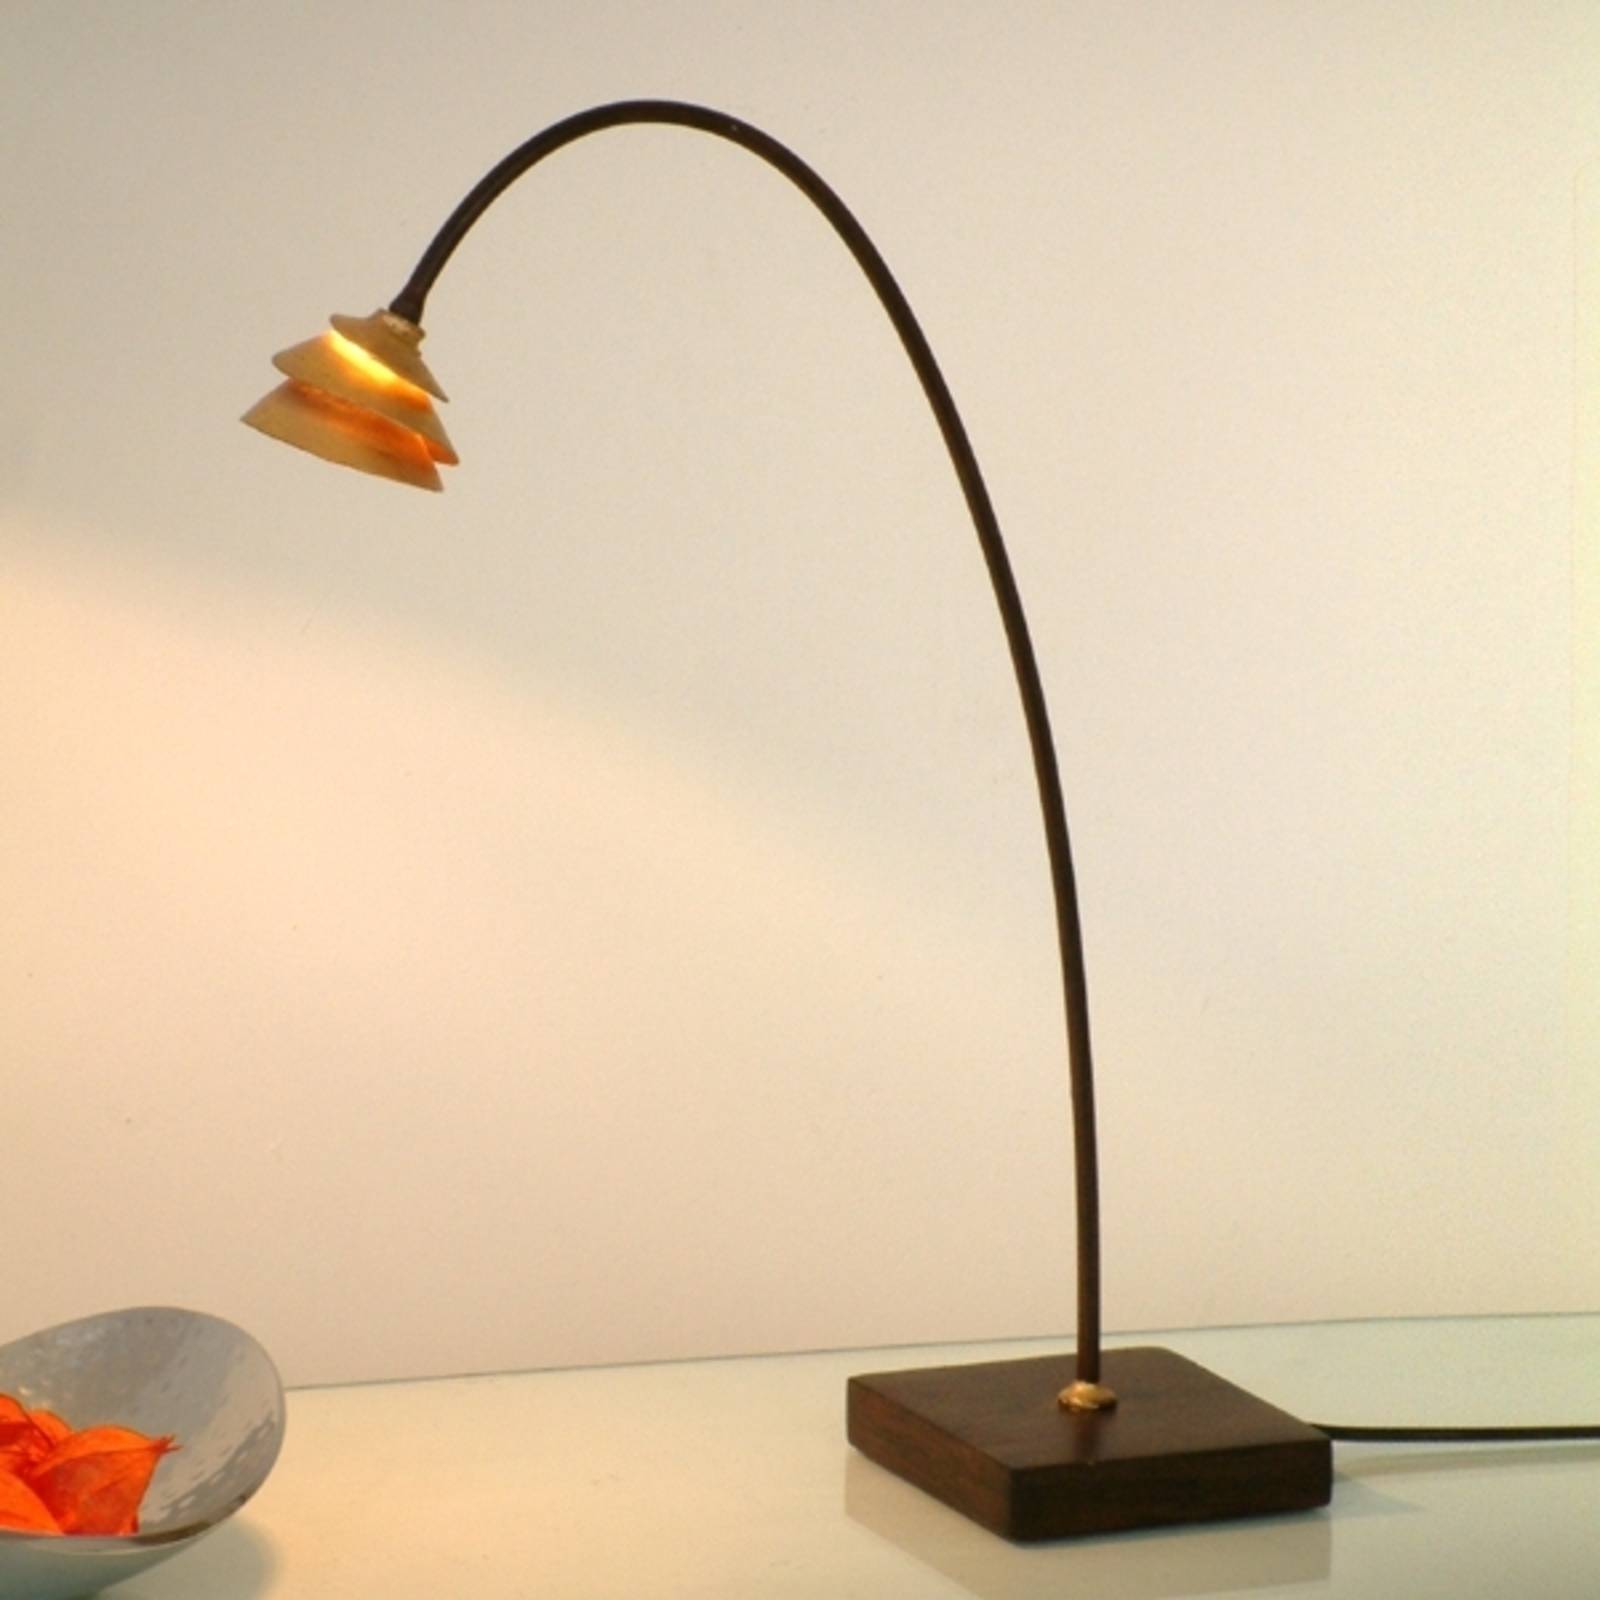 Holländer snail asztali lámpa, barna-arany, ívelt